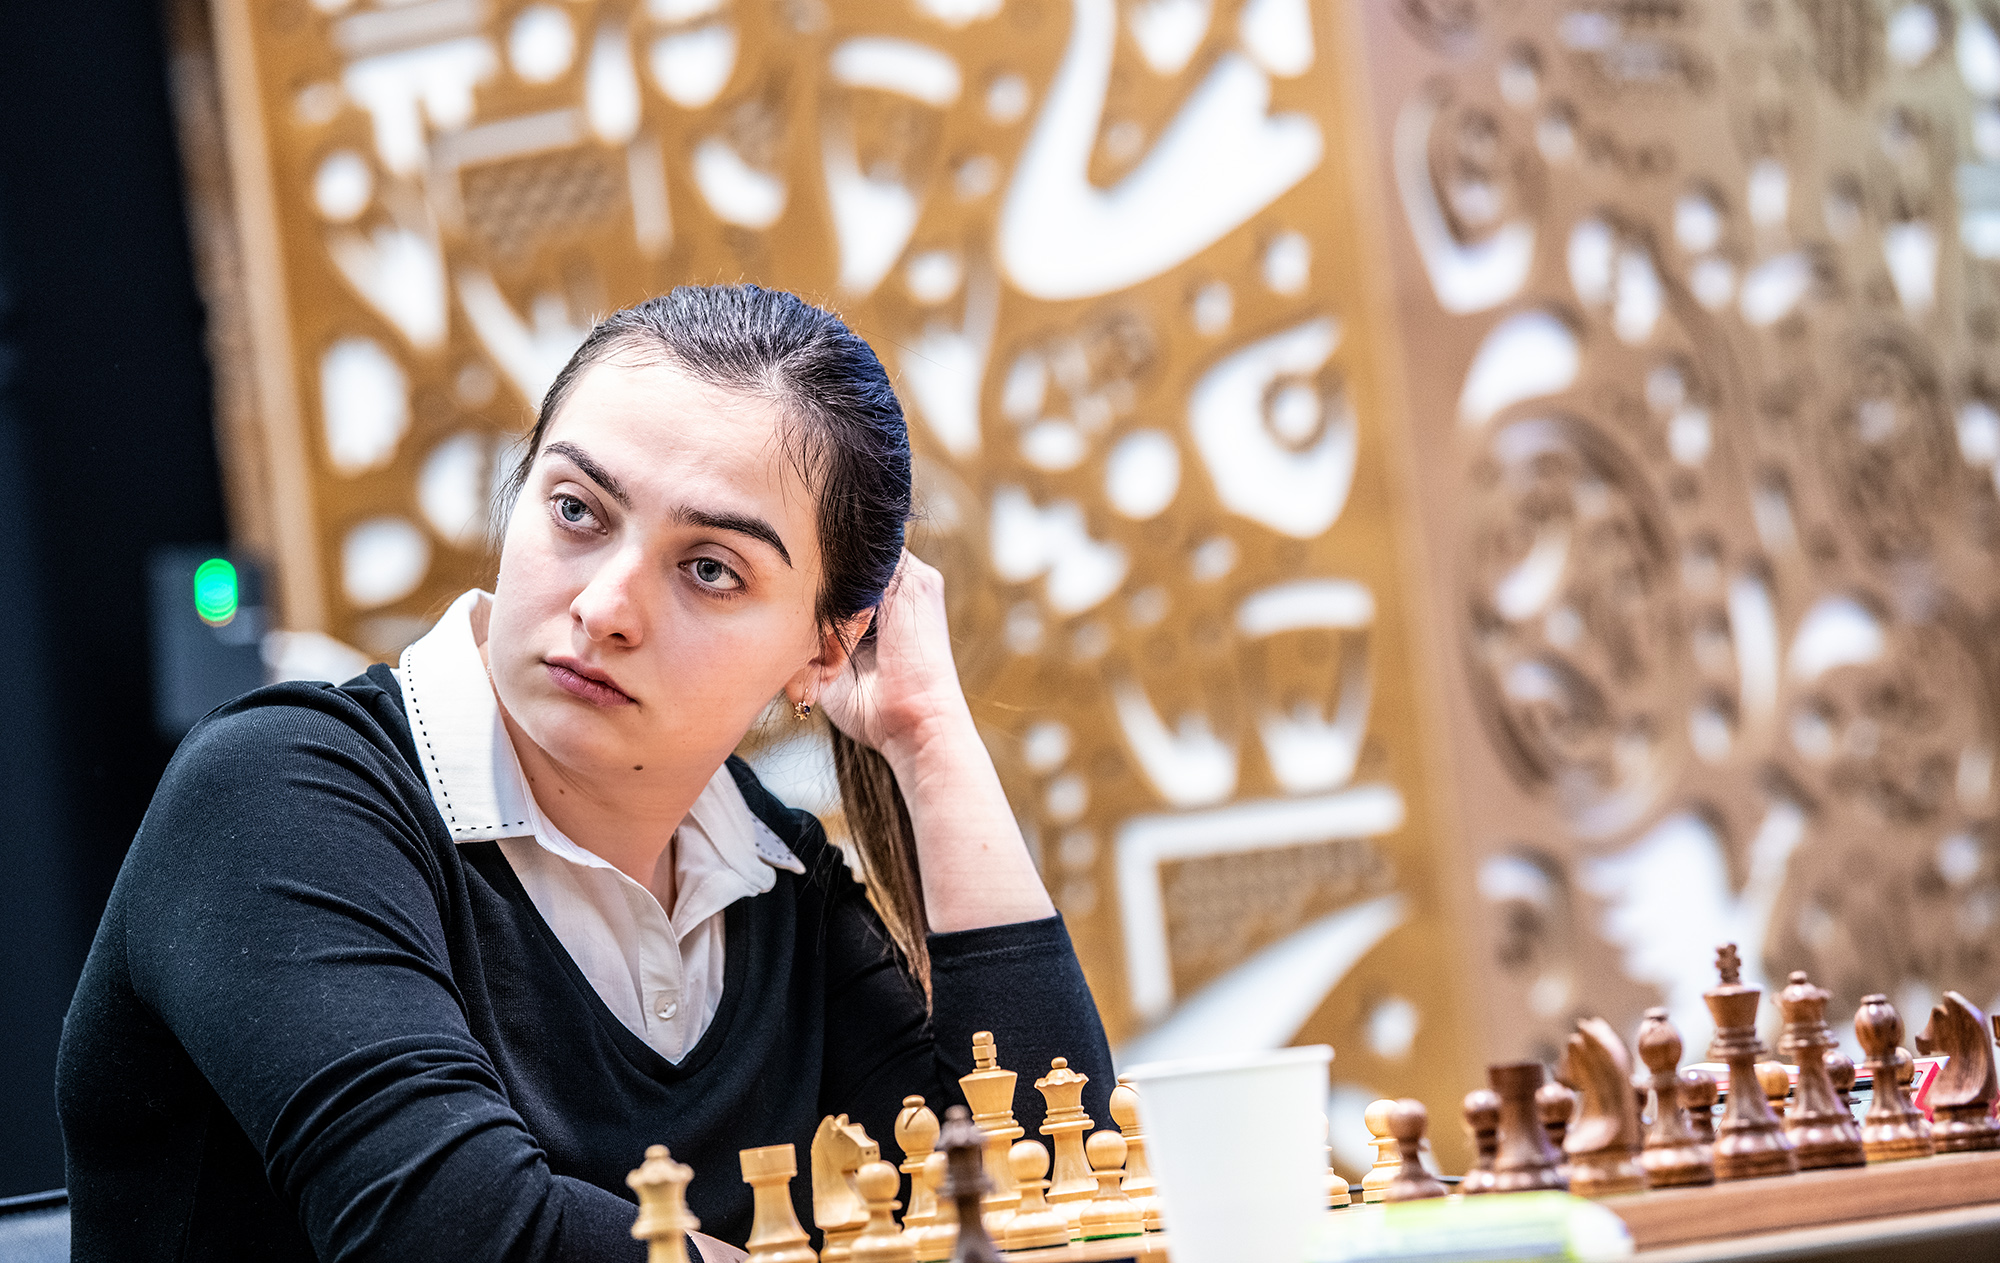 Profile for CXR Chess Player Aibike Myrzaibraimova